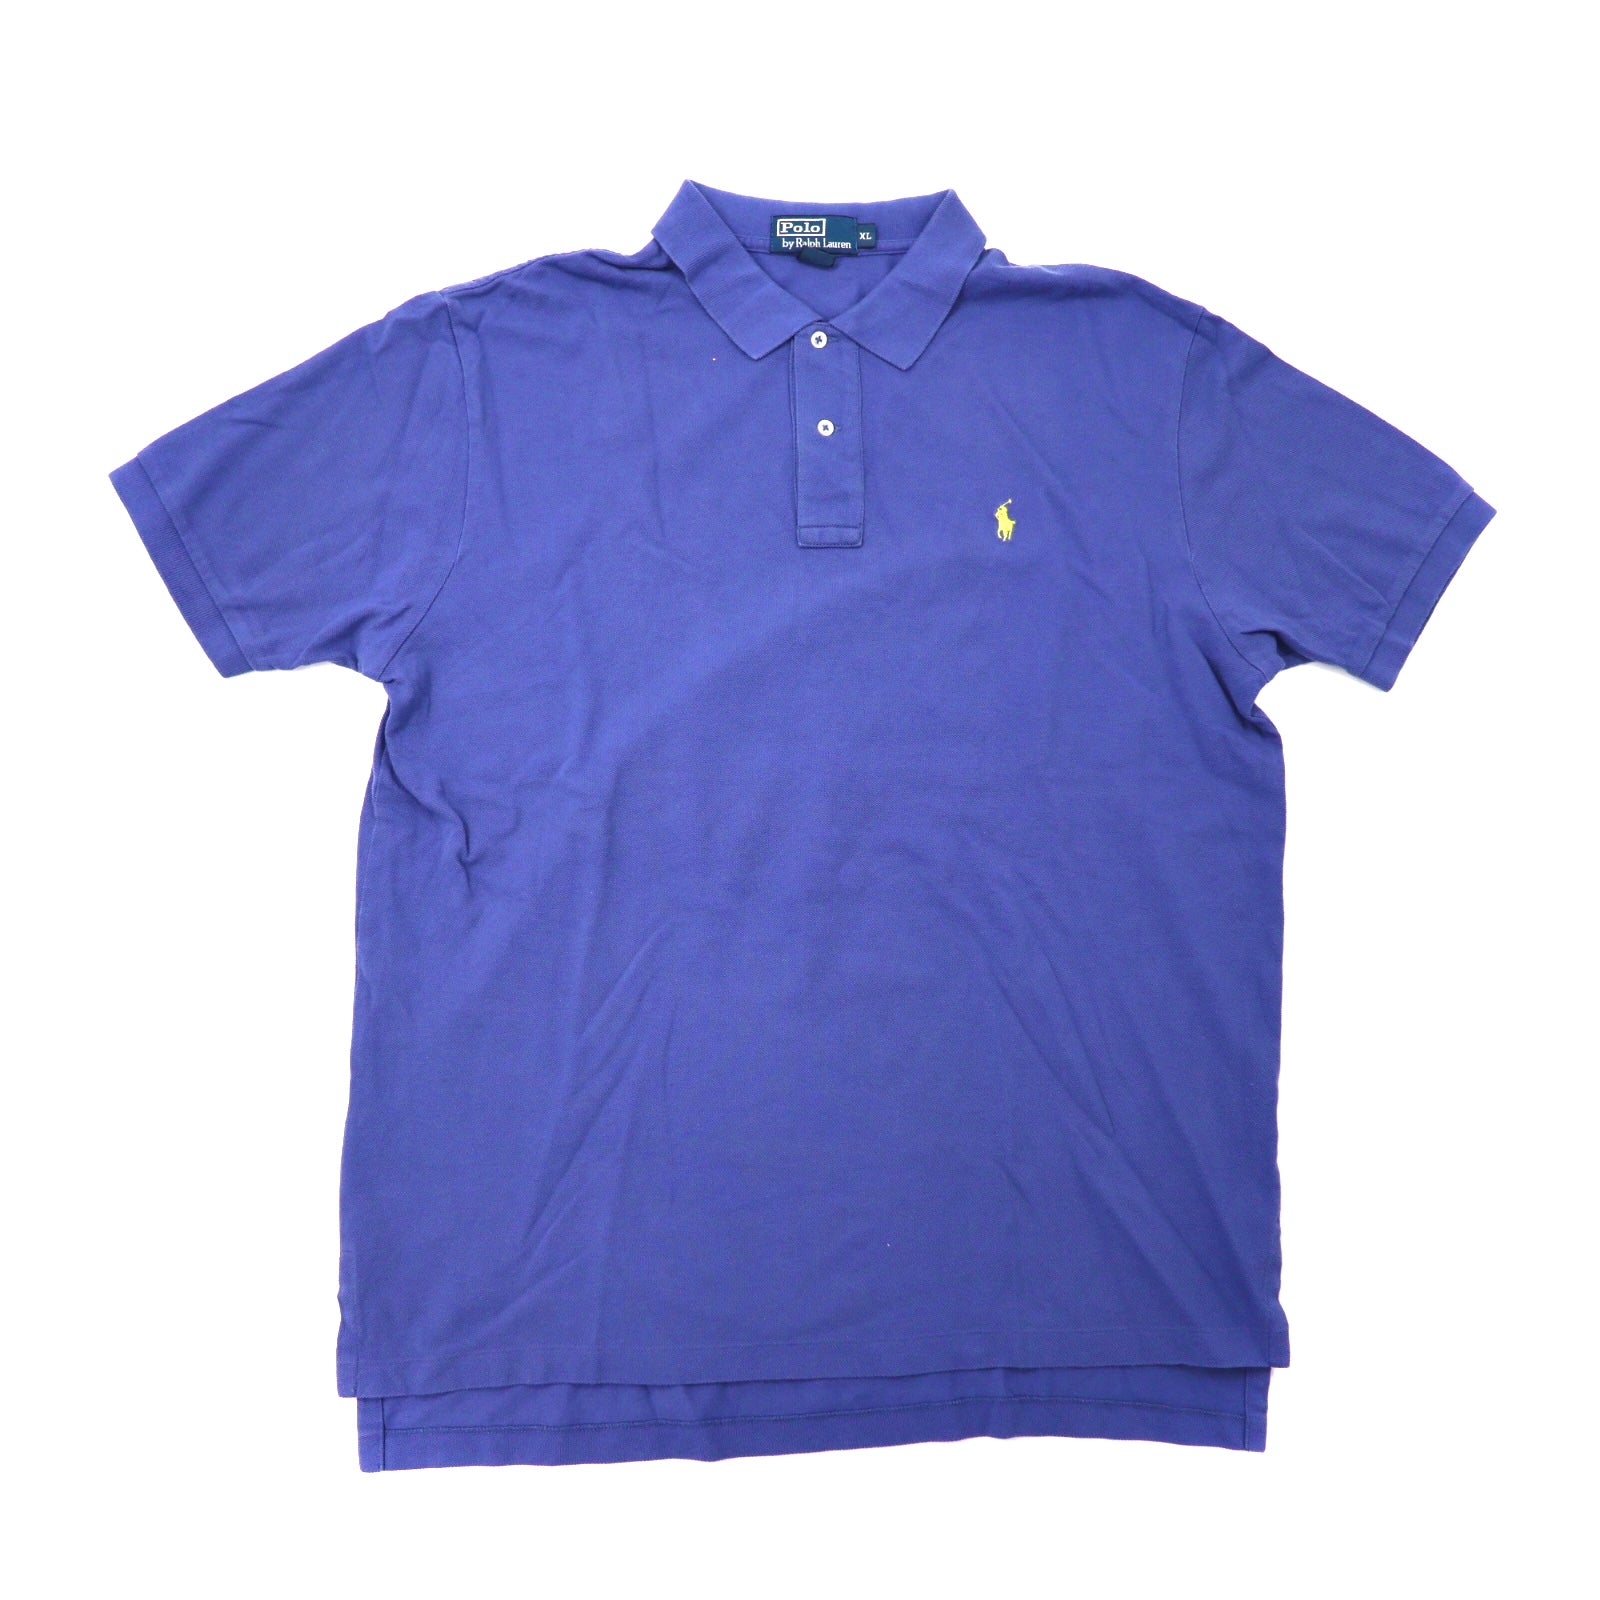 Polo by Ralph Lauren ポロシャツ XL ネイビー ビッグサイズ